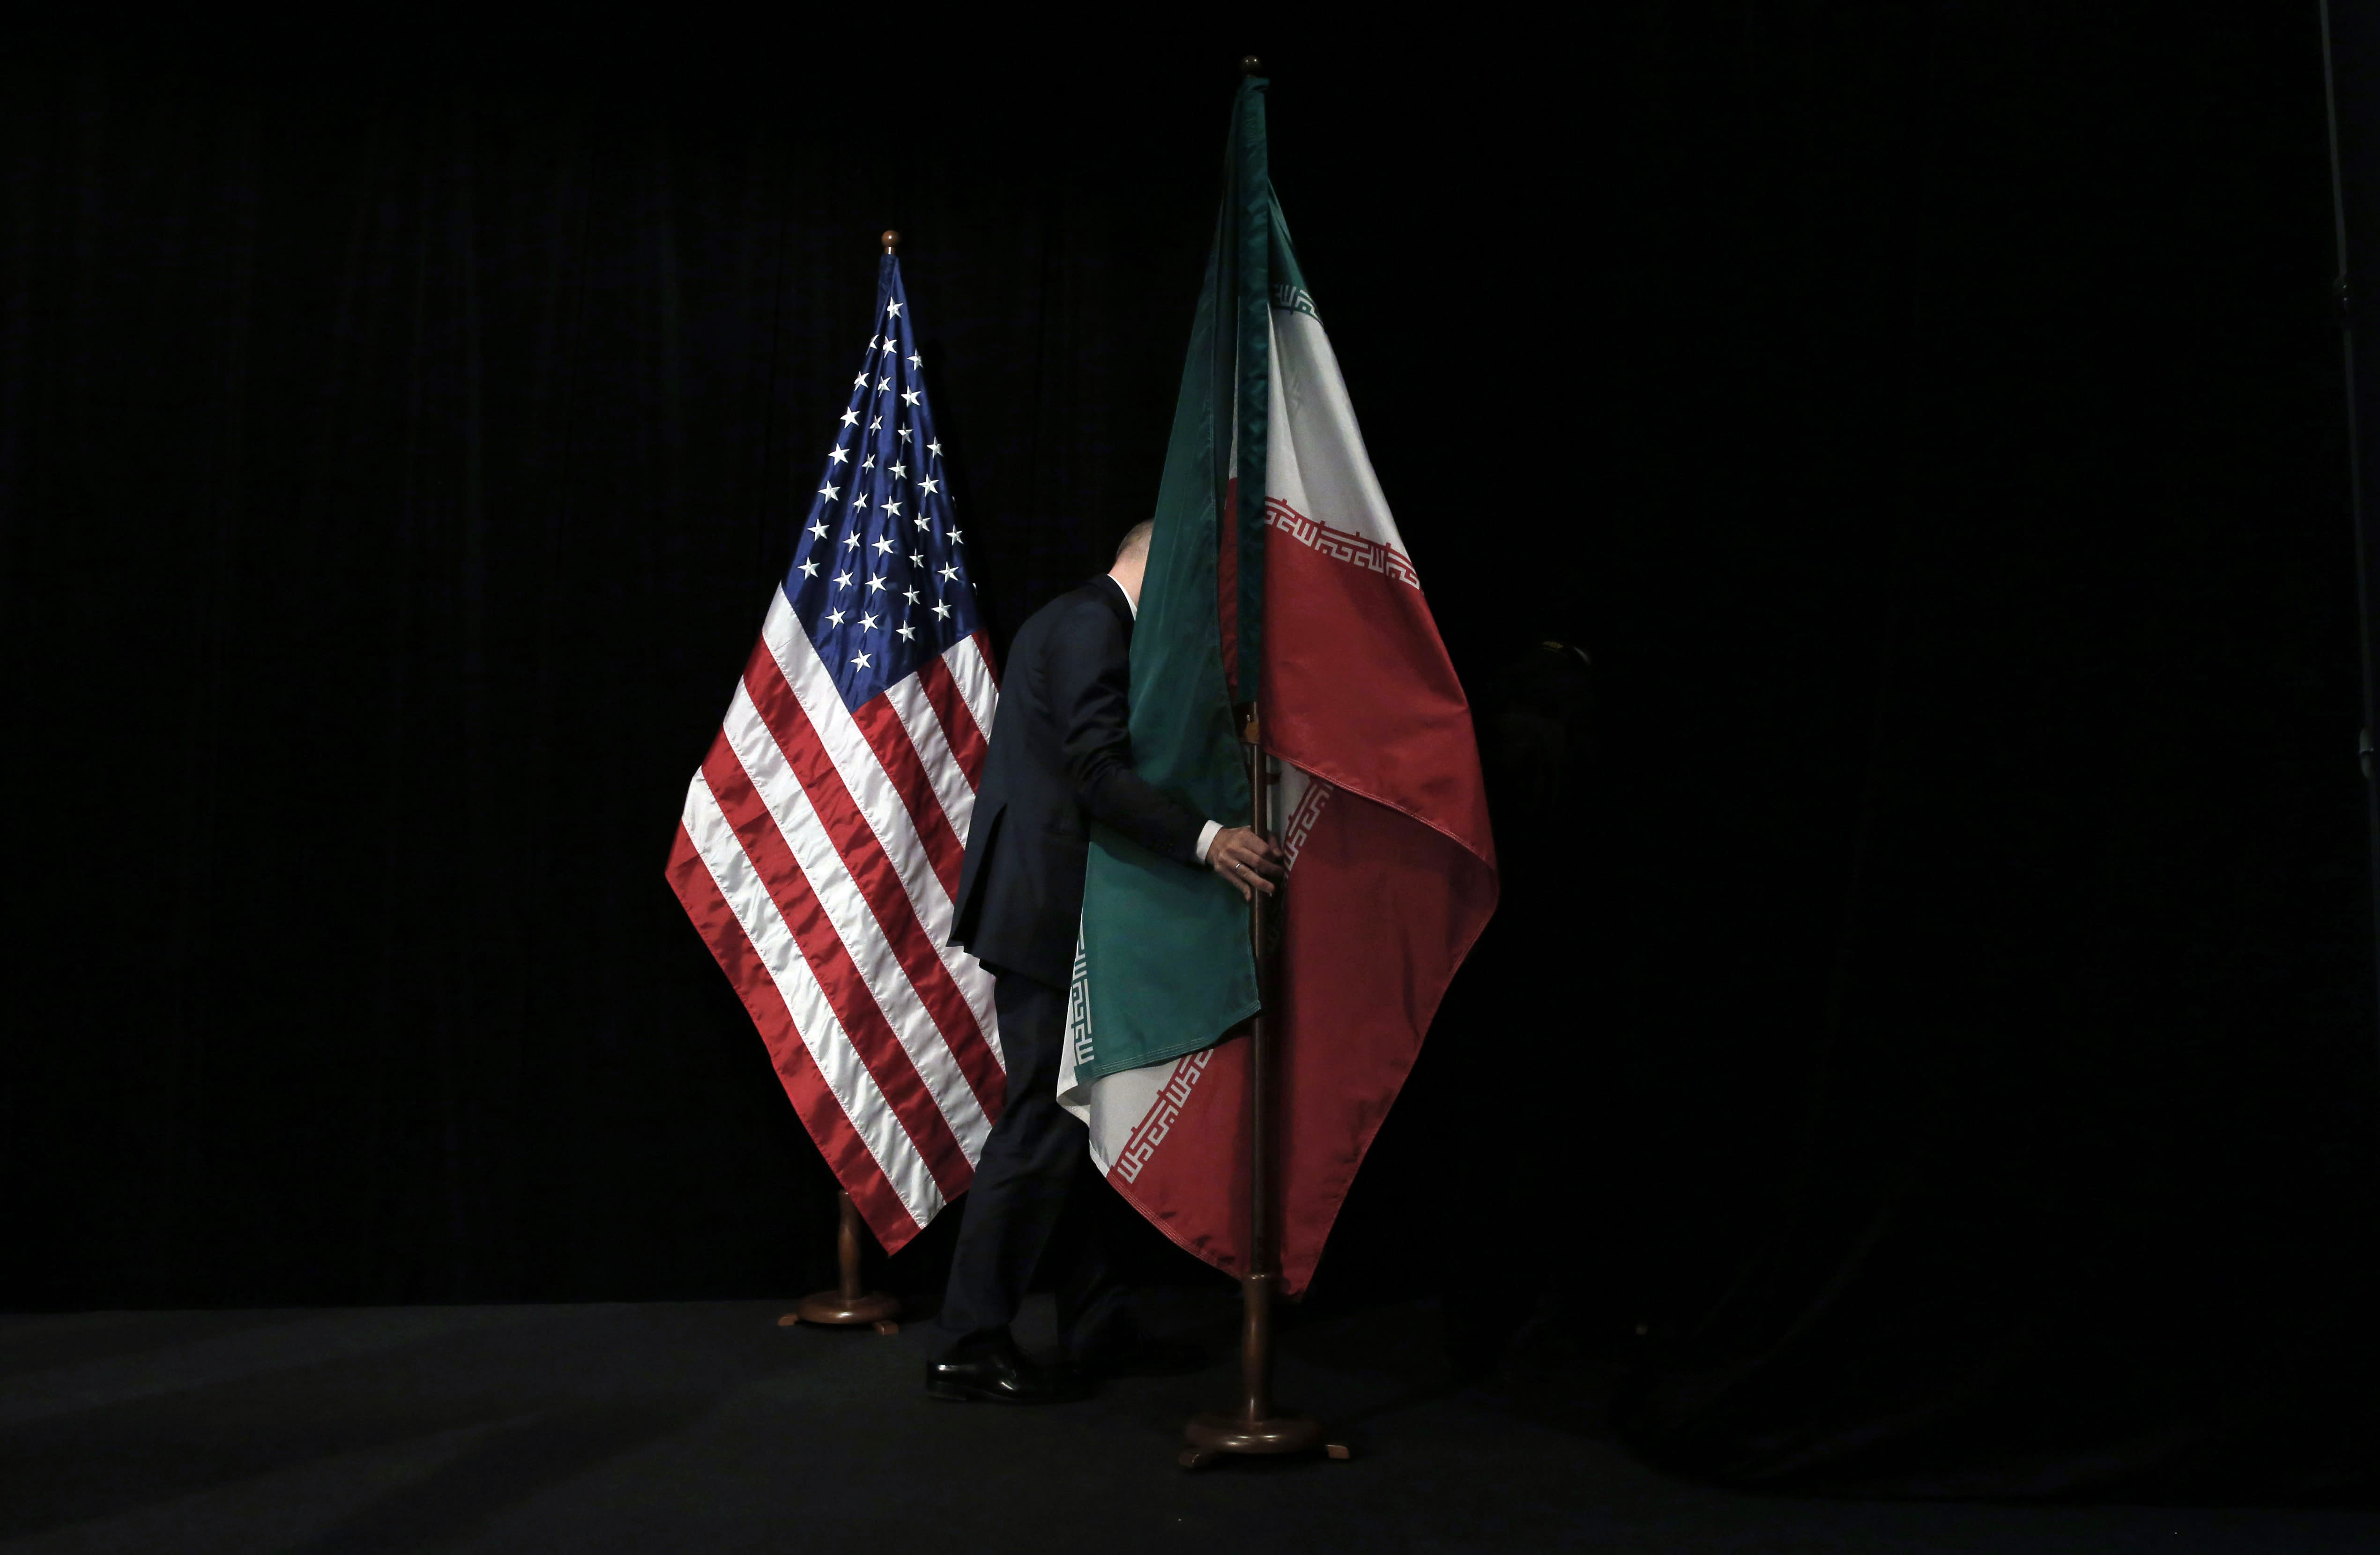 L’accord américano-iranien est finalement possible parce que l’Iran a besoin d’argent